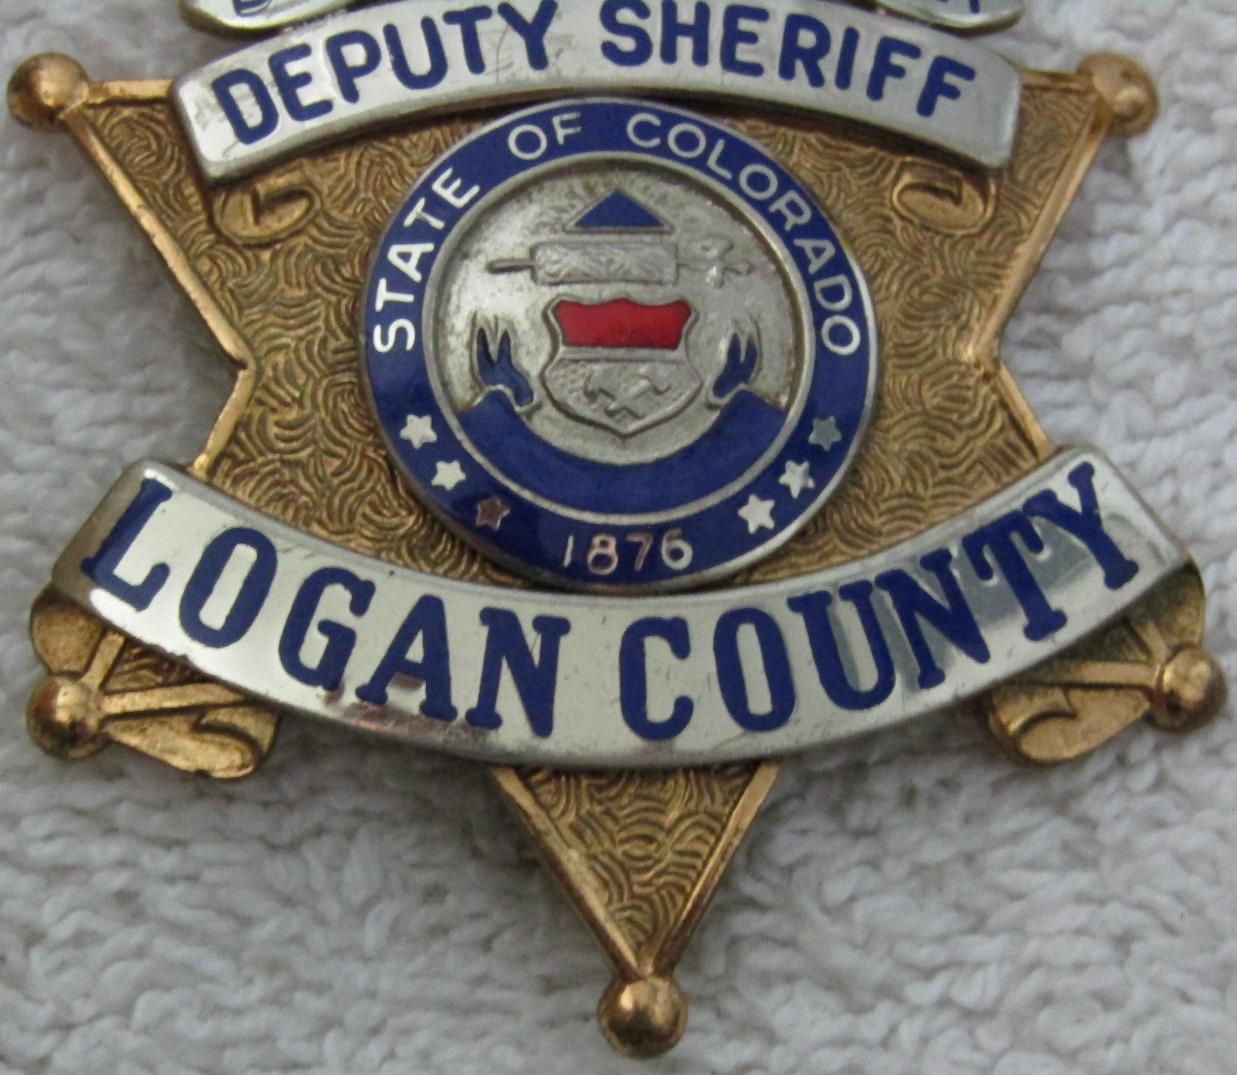 1950-60's Vintage  "LOGAN COUNTY COLORADO DEPUTY SHERIFF" 6 Point Star Badge-Named